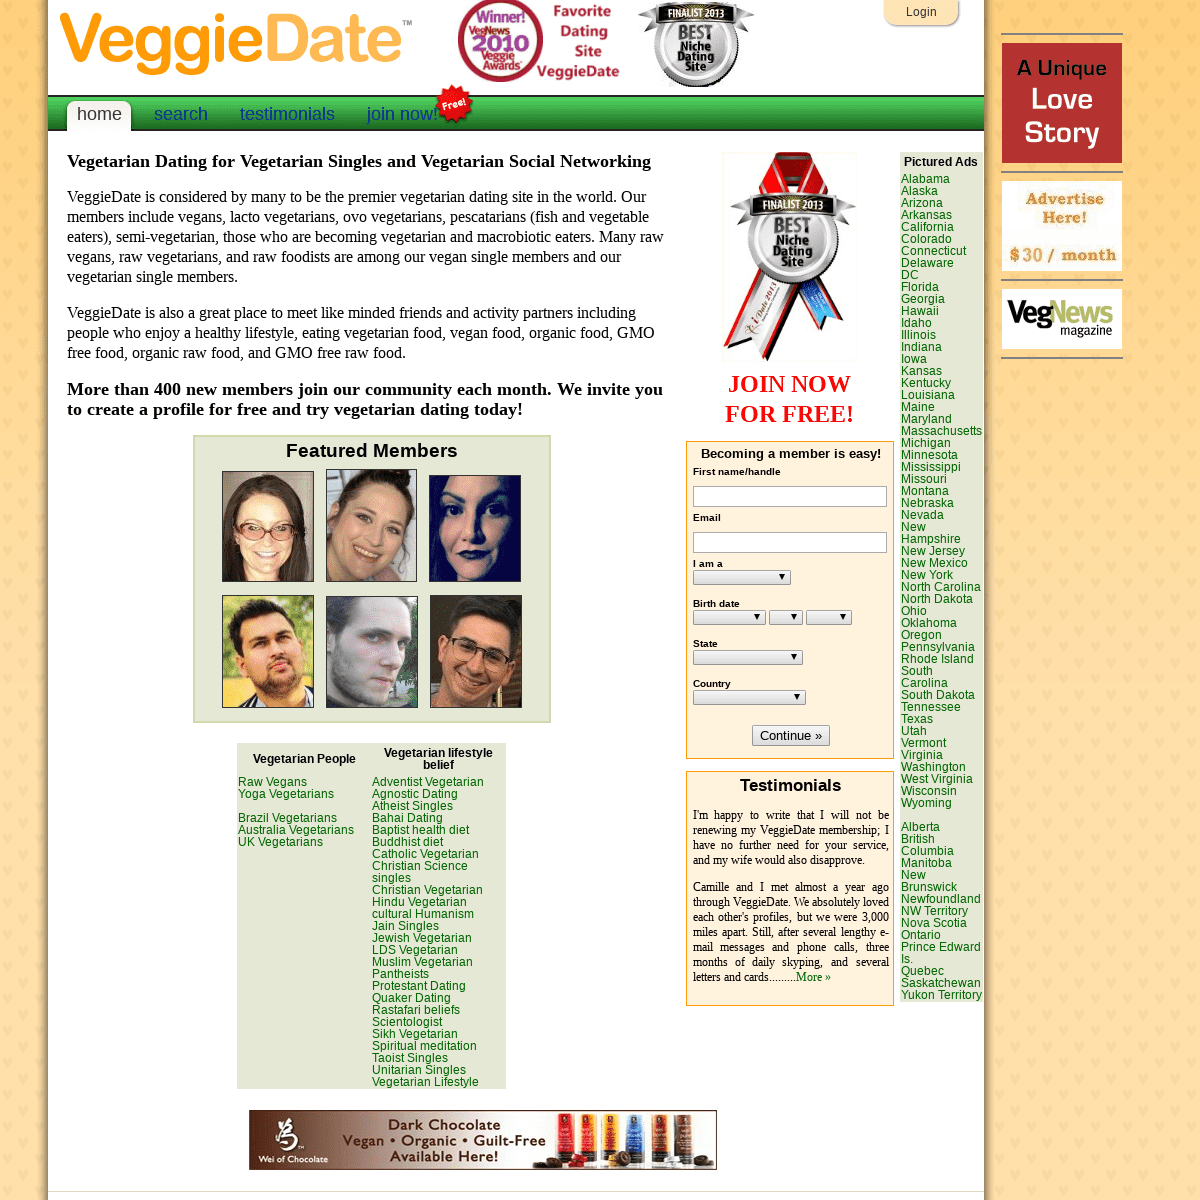  Vegetarian dating for vegetarian singles and vegan dating for vegan singles.